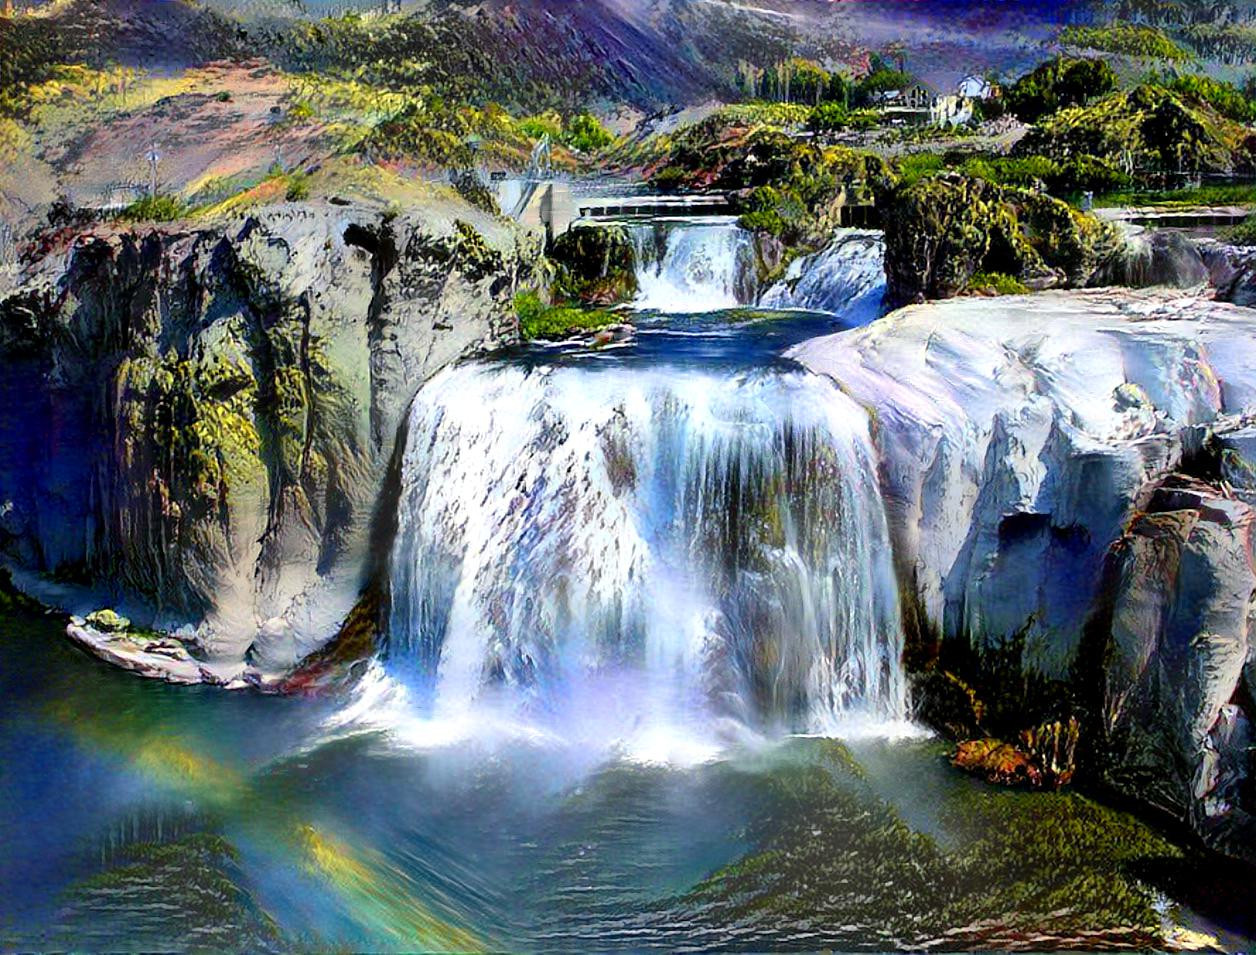 rainbows and waterfalls